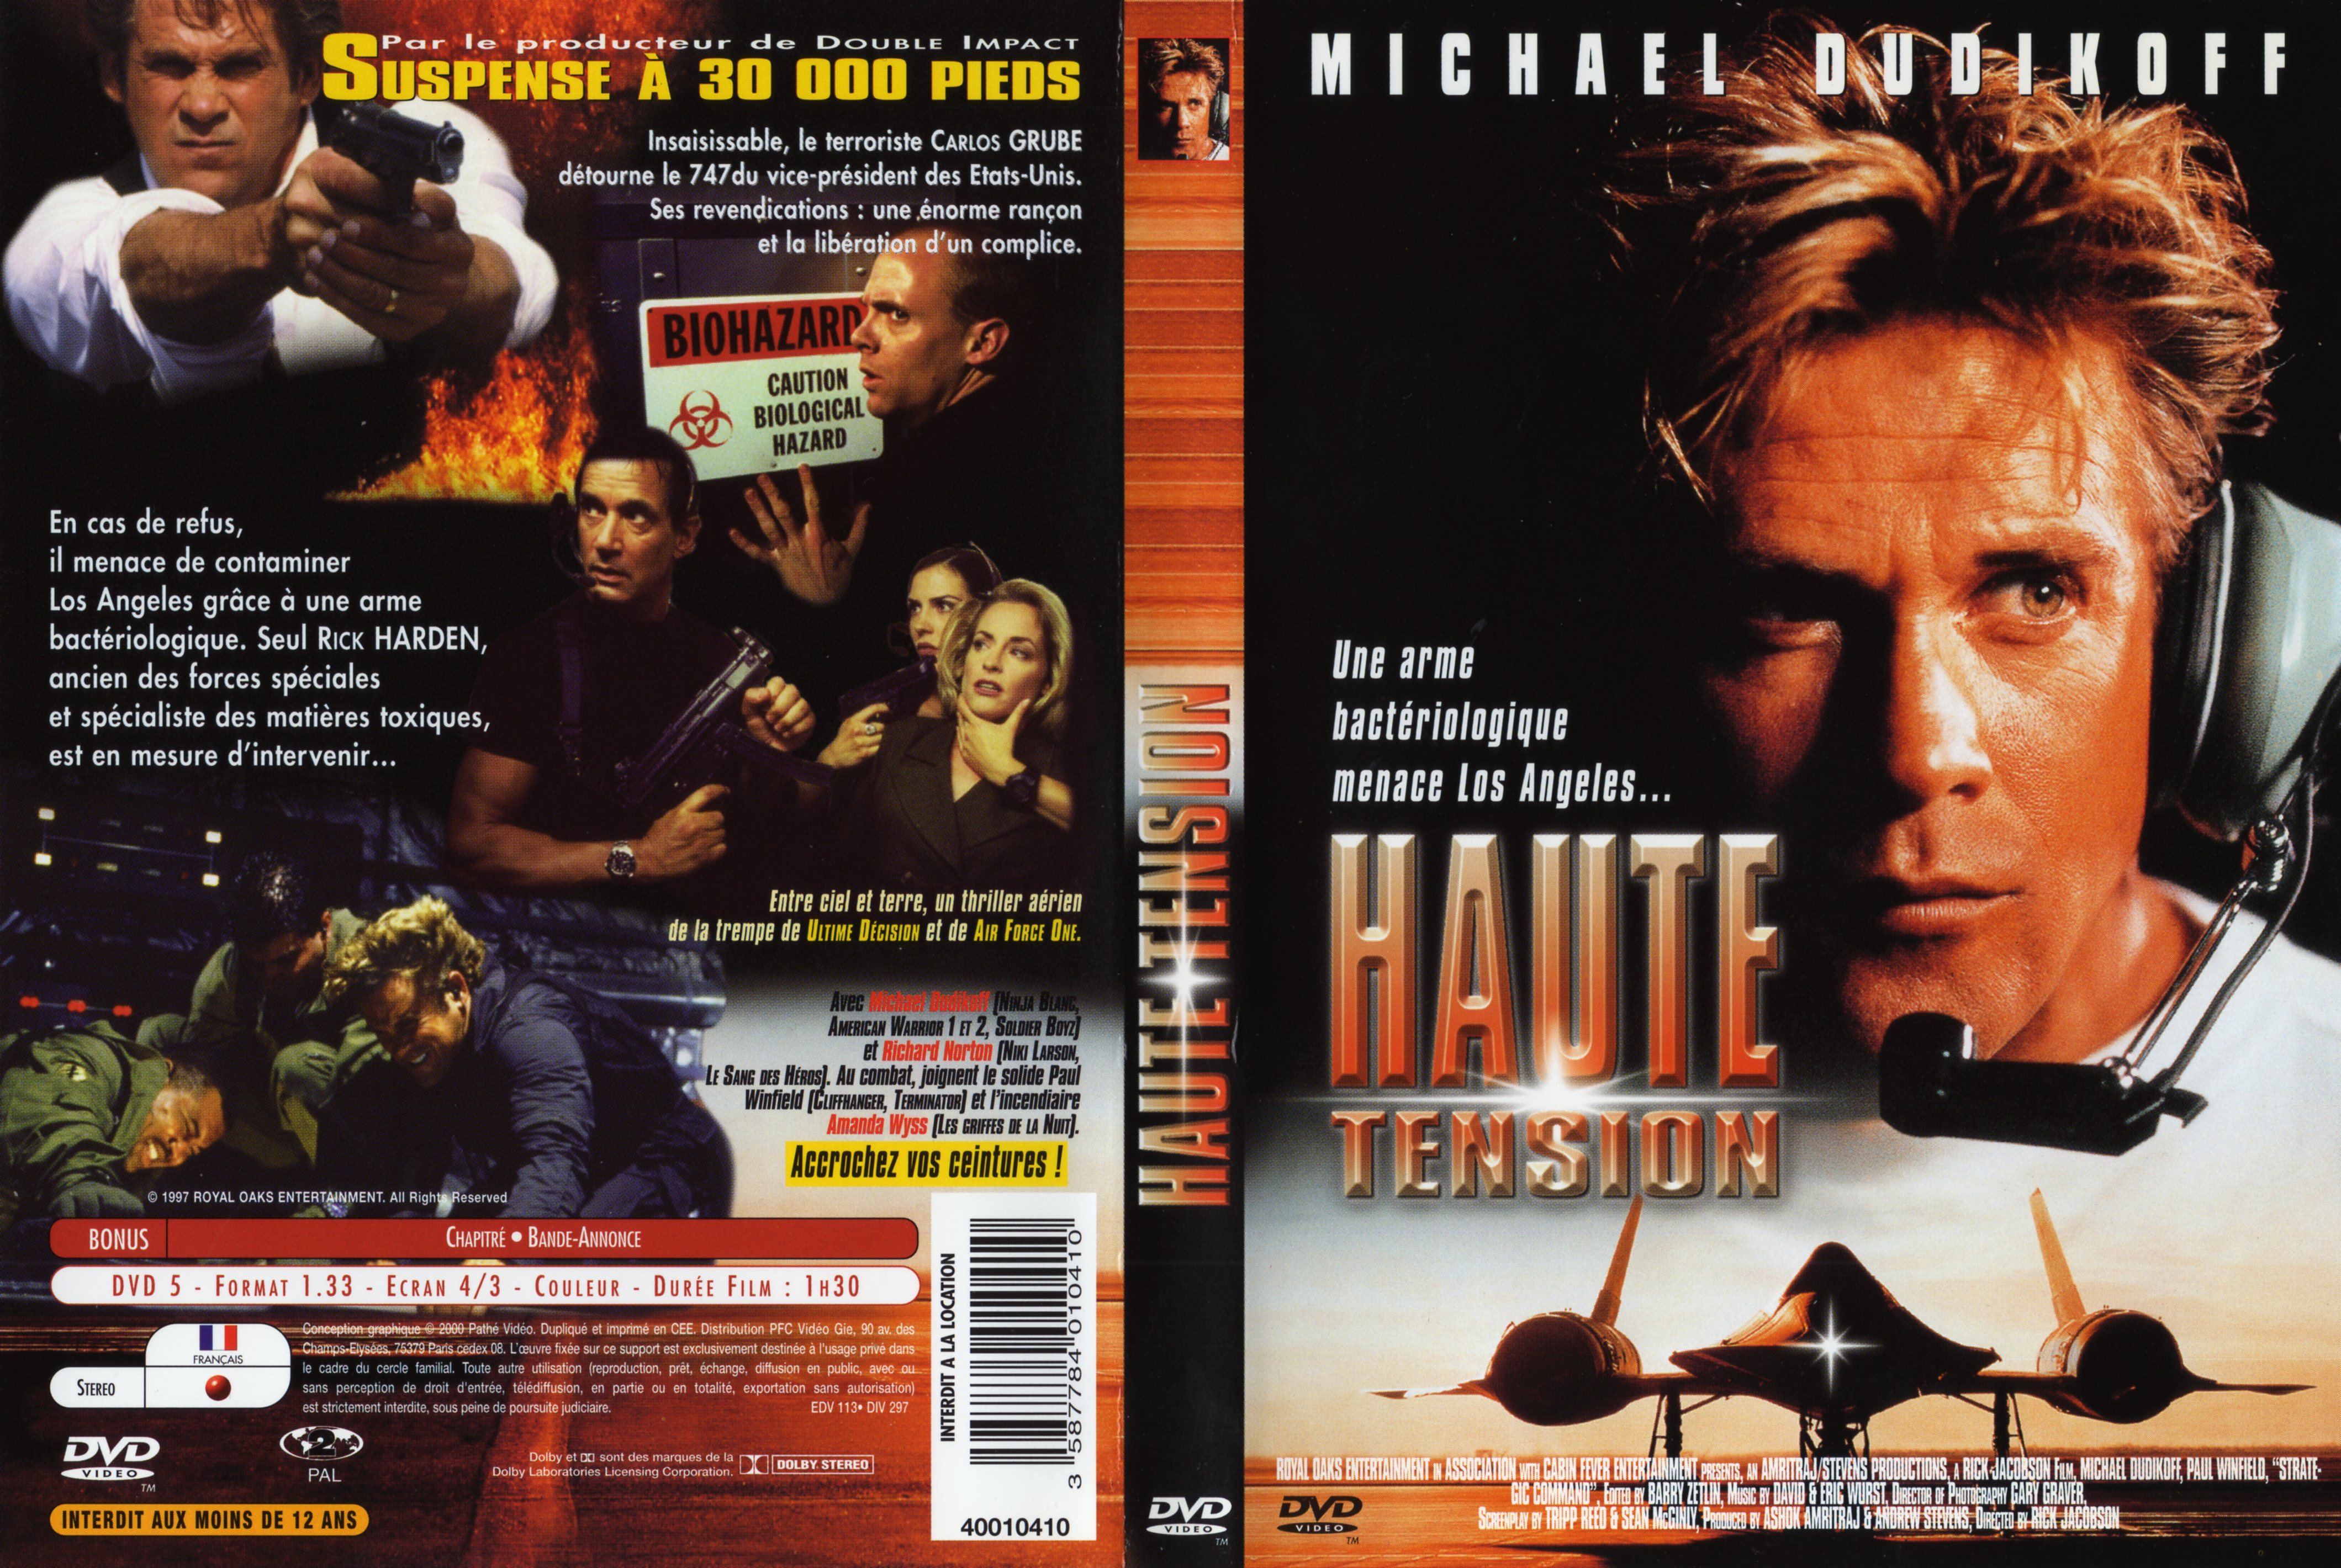 Jaquette DVD Haute tension (Michael Dudikoff)